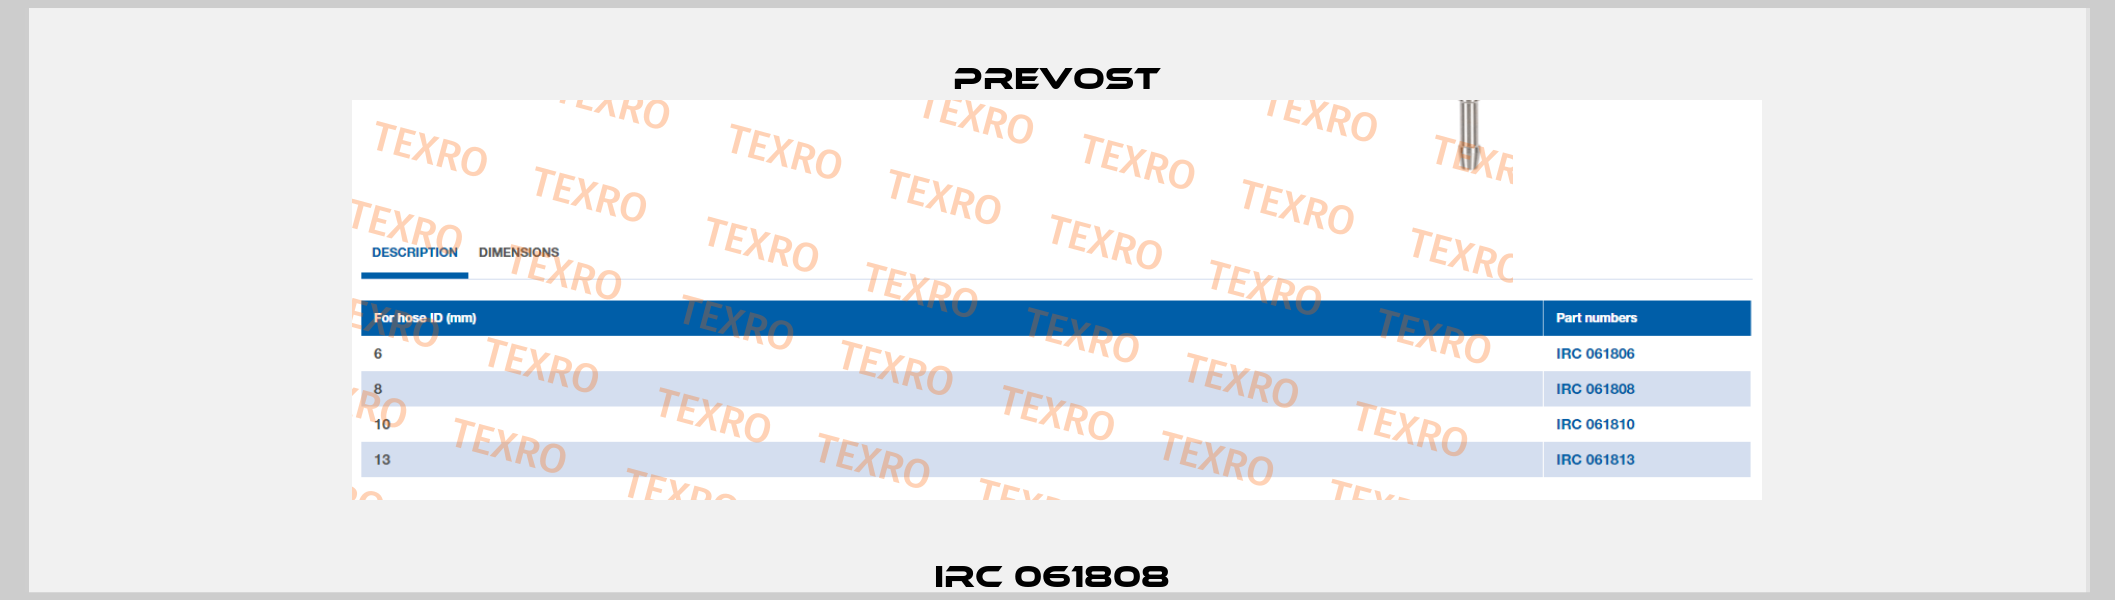 IRC 061808  Prevost